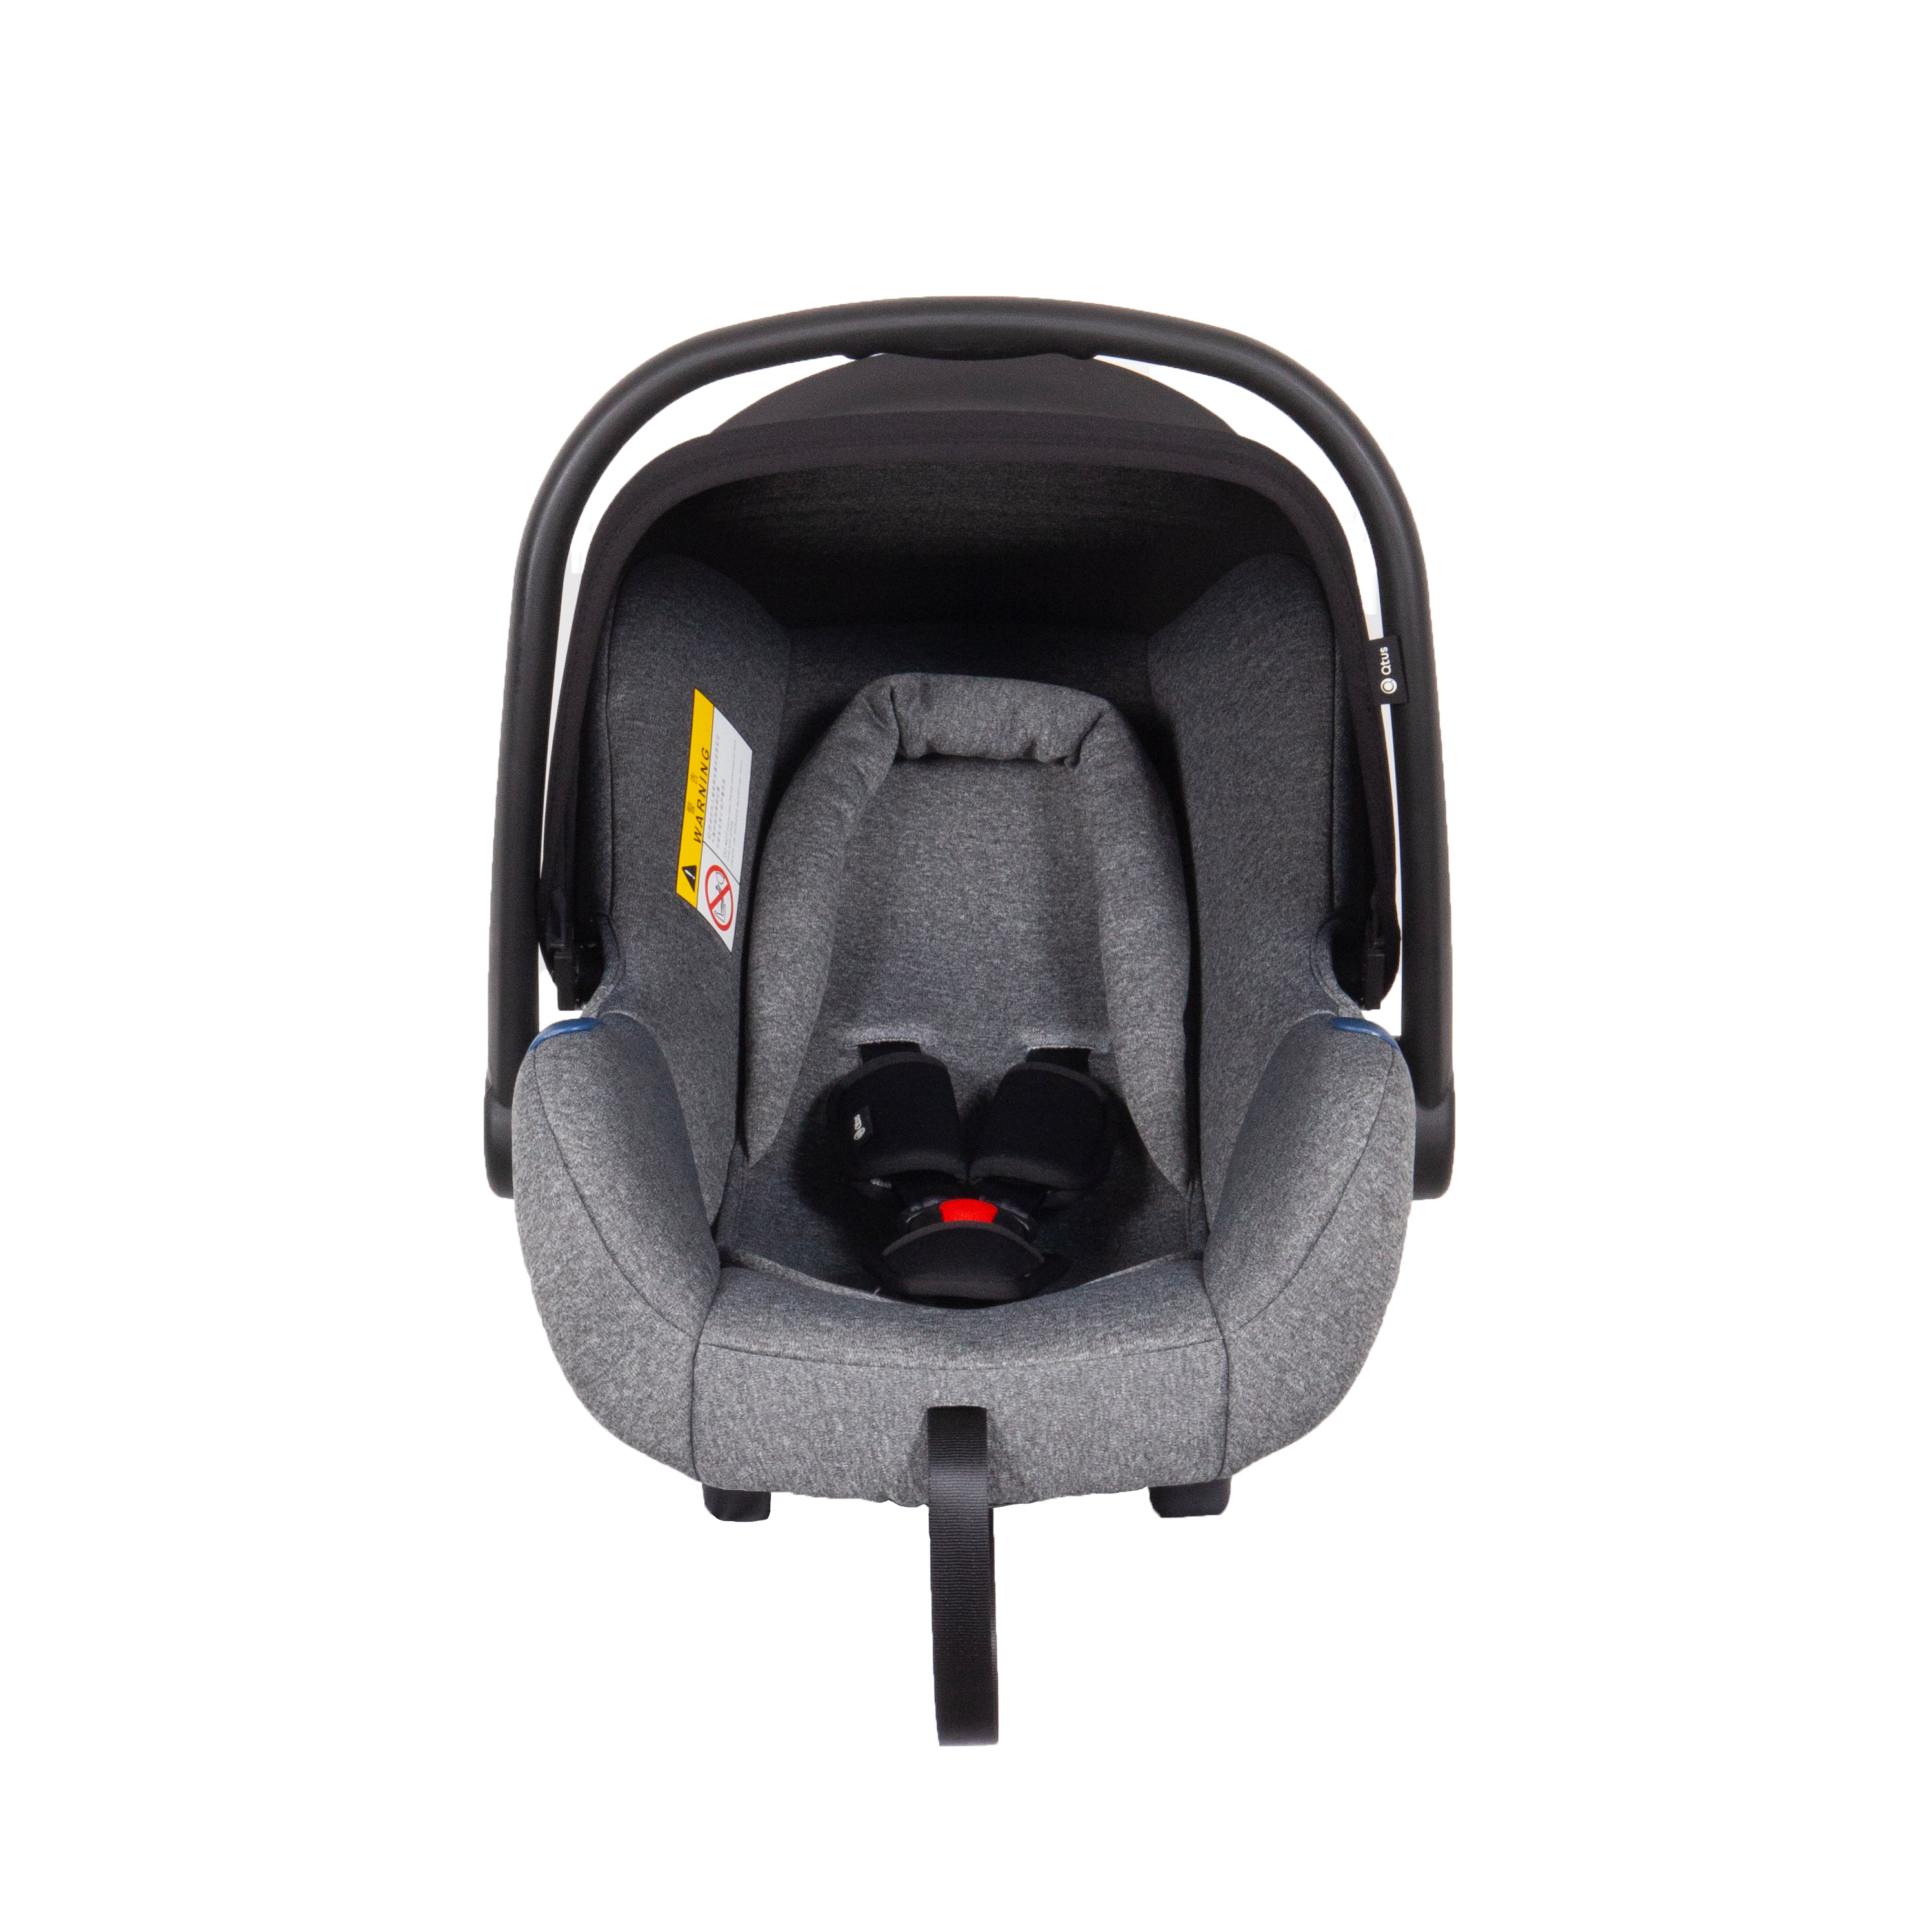 YKO - 707 Infant Car Seat